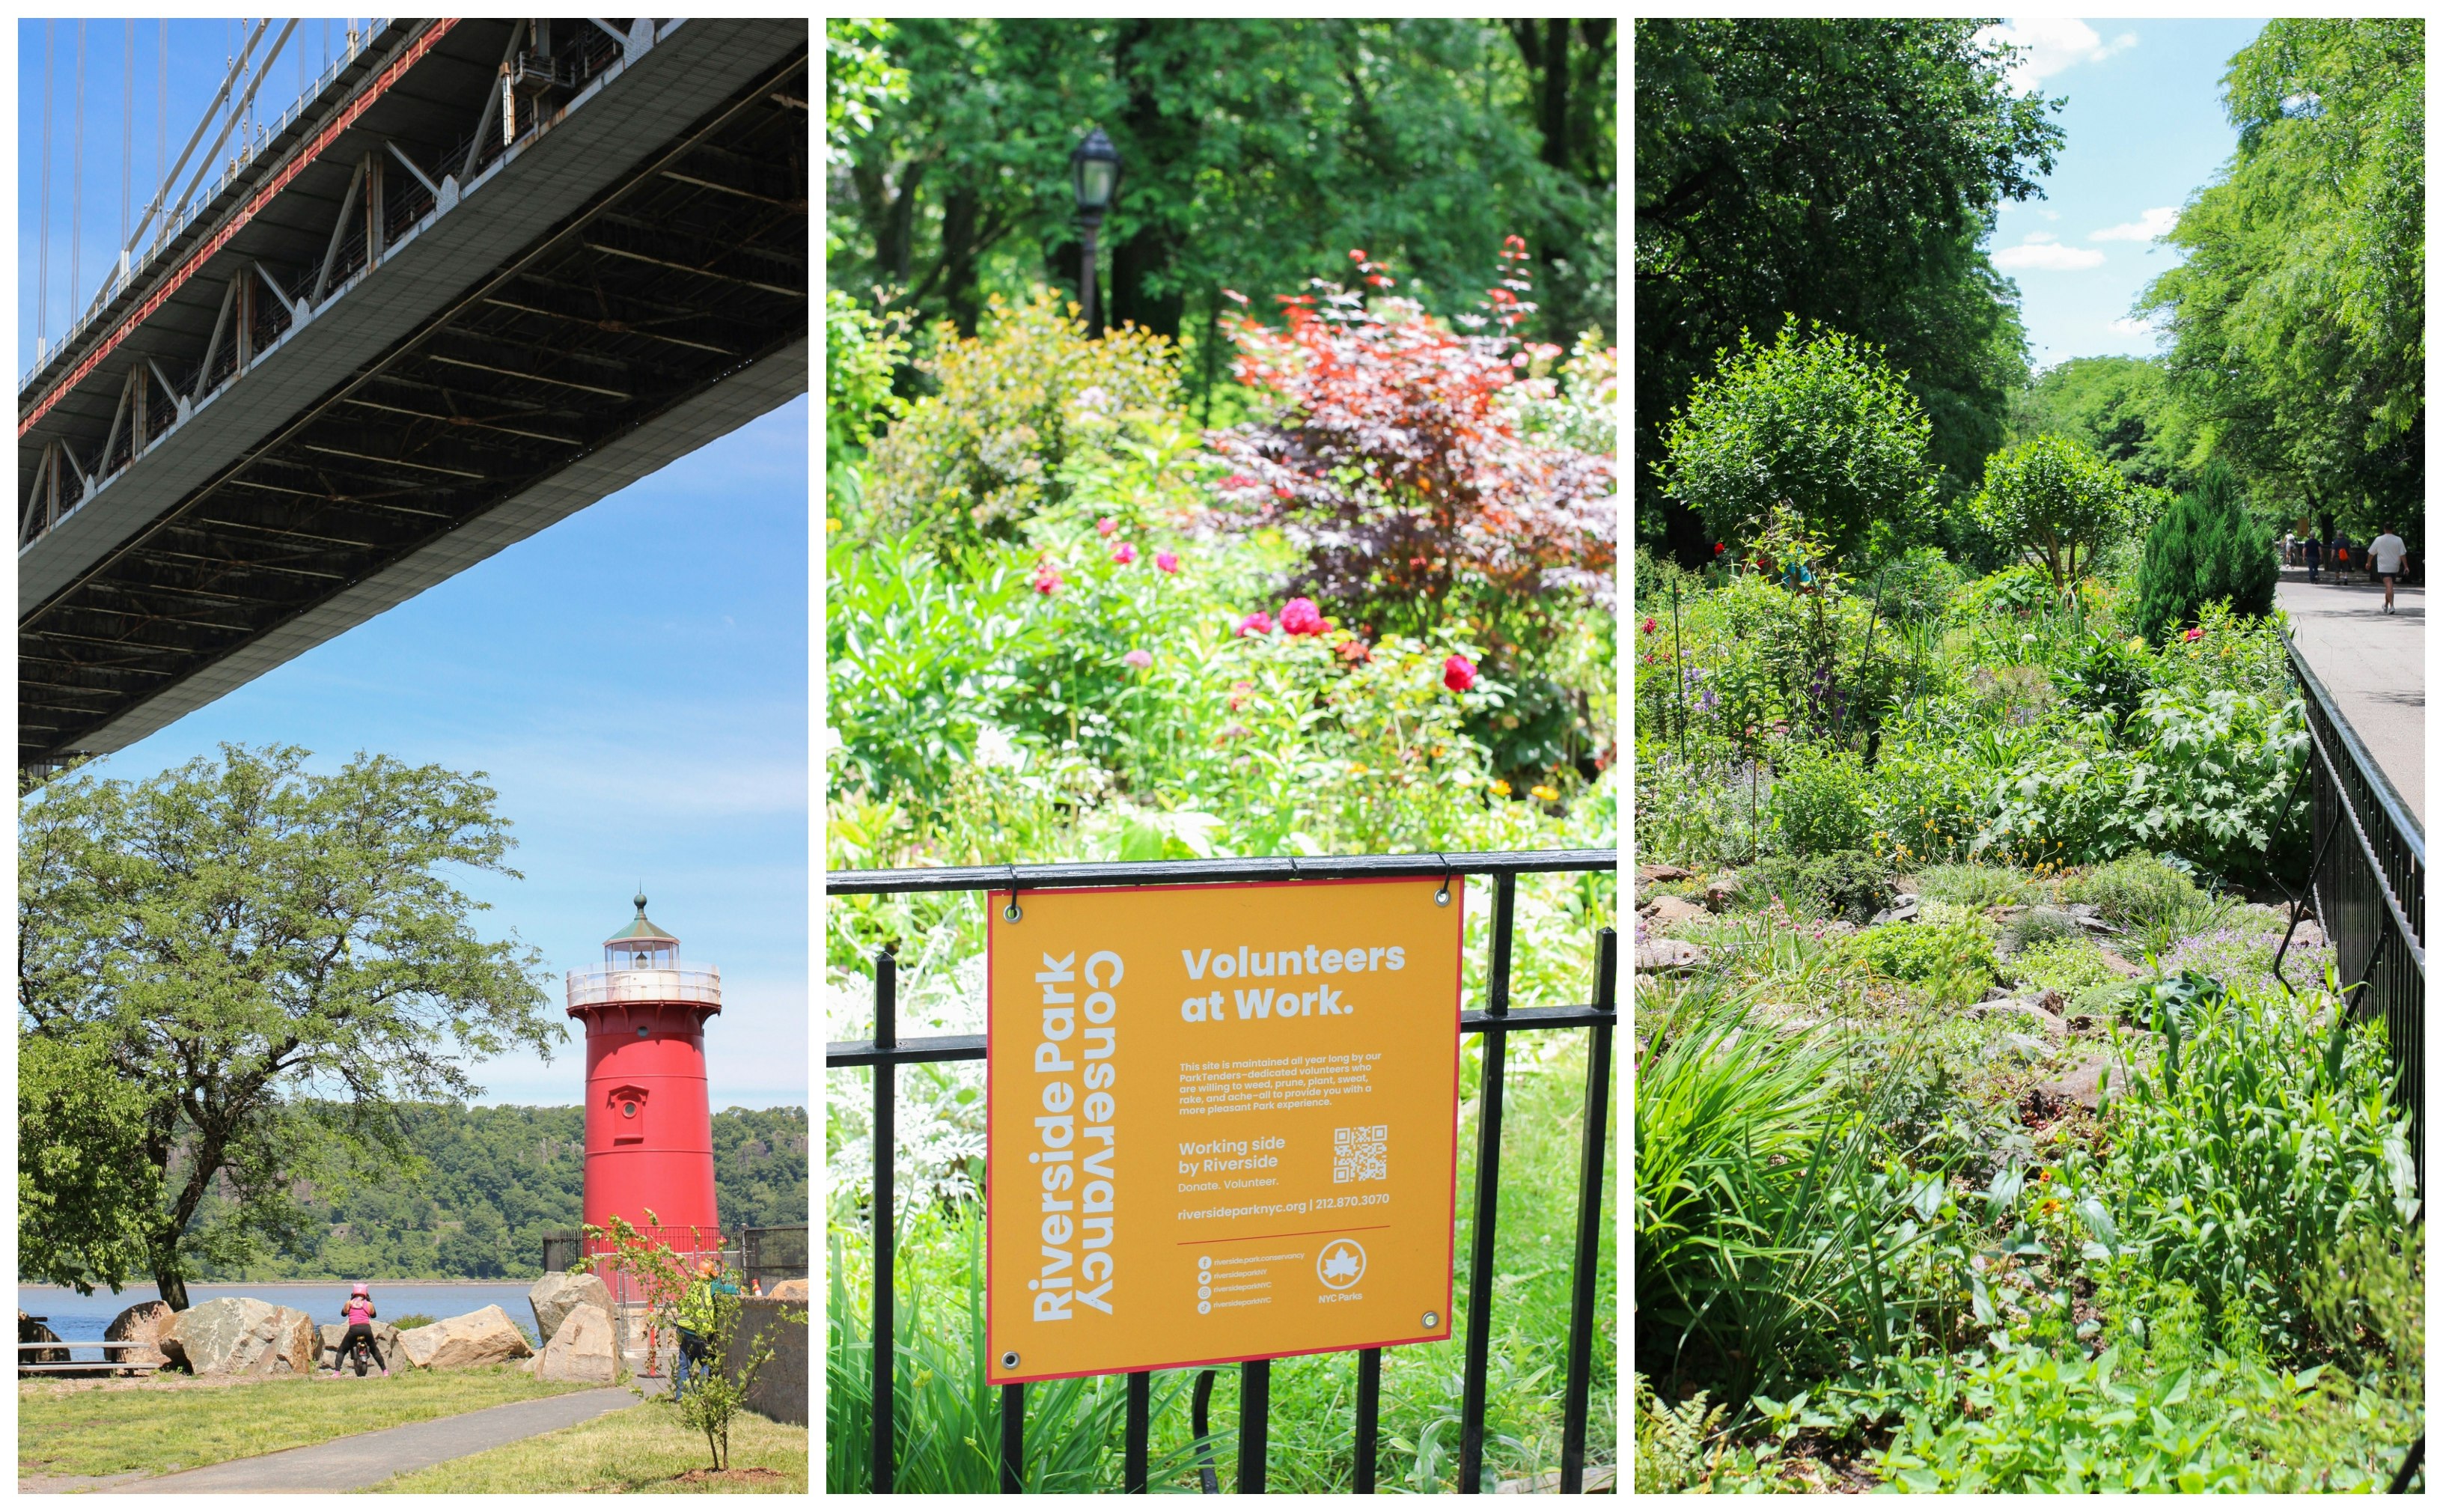 Collage; Left: The Little Red Lighthouse in Riverside Park, Middle: Riverside Park 91st St Garden, Right: Riverside Park 91st St Garden 